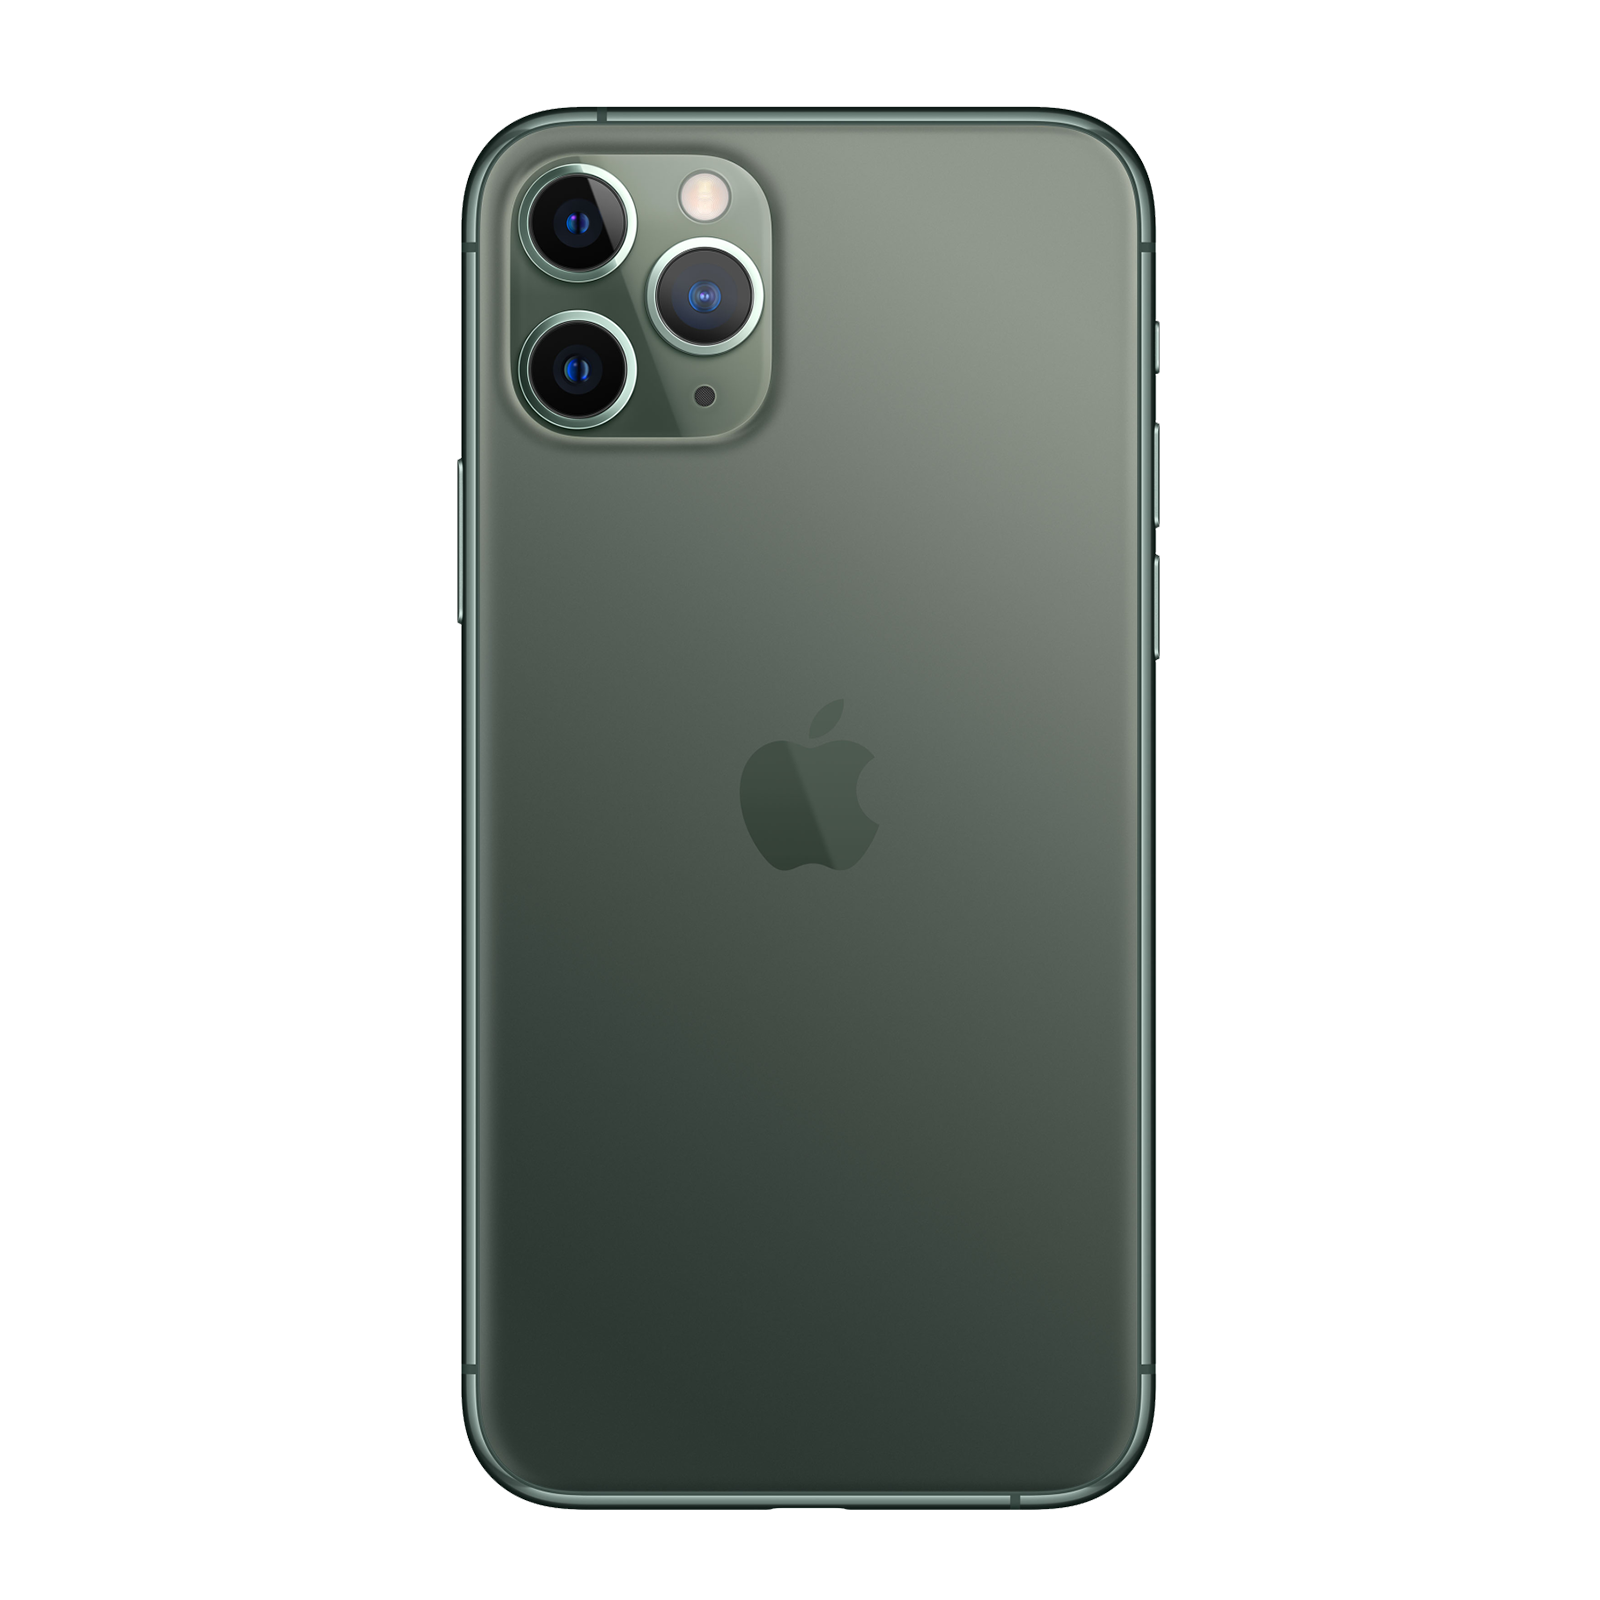 Apple iPhone 11 Pro 512GB Verde Noche Bueno - Desbloqueado